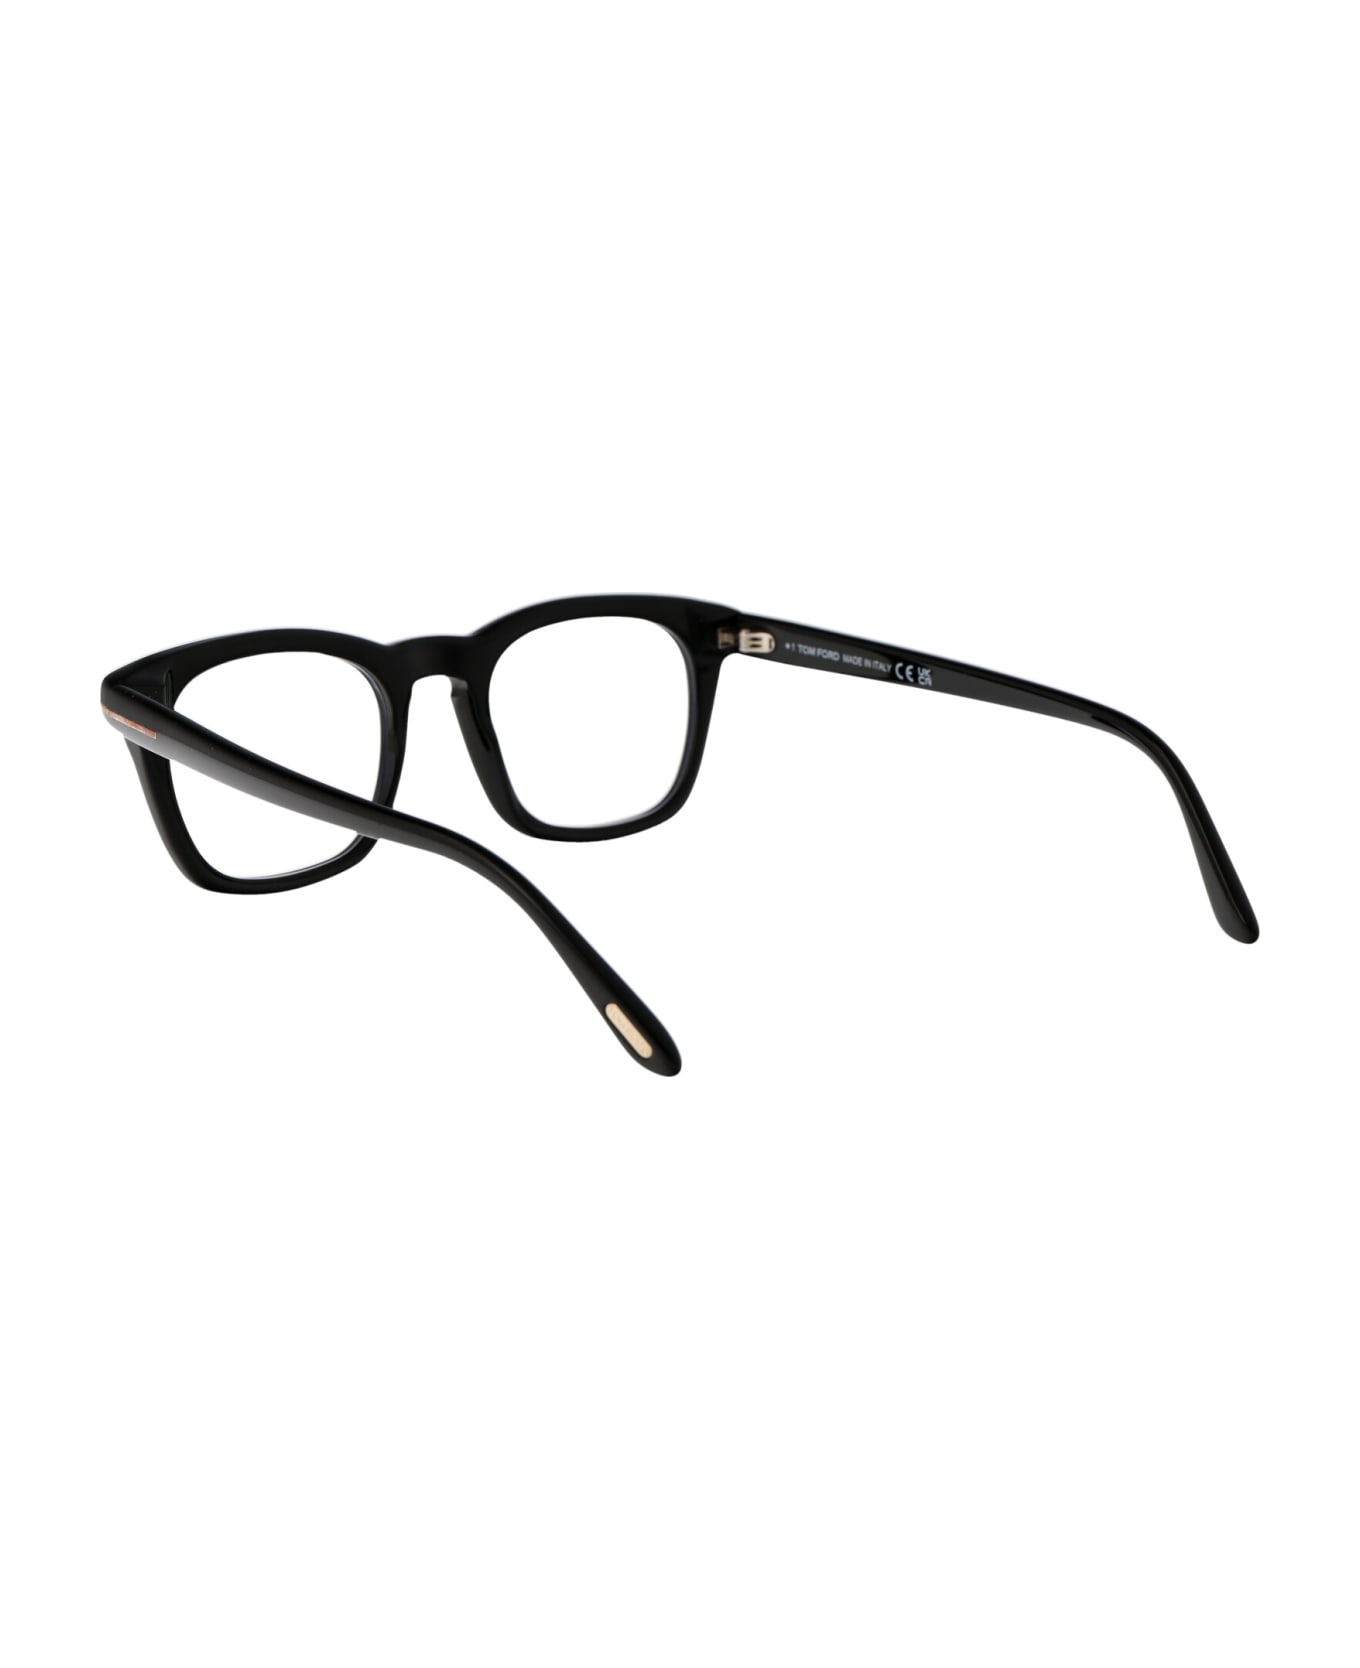 Tom Ford Eyewear Ft5870-b Glasses - 001 Nero Lucido アイウェア